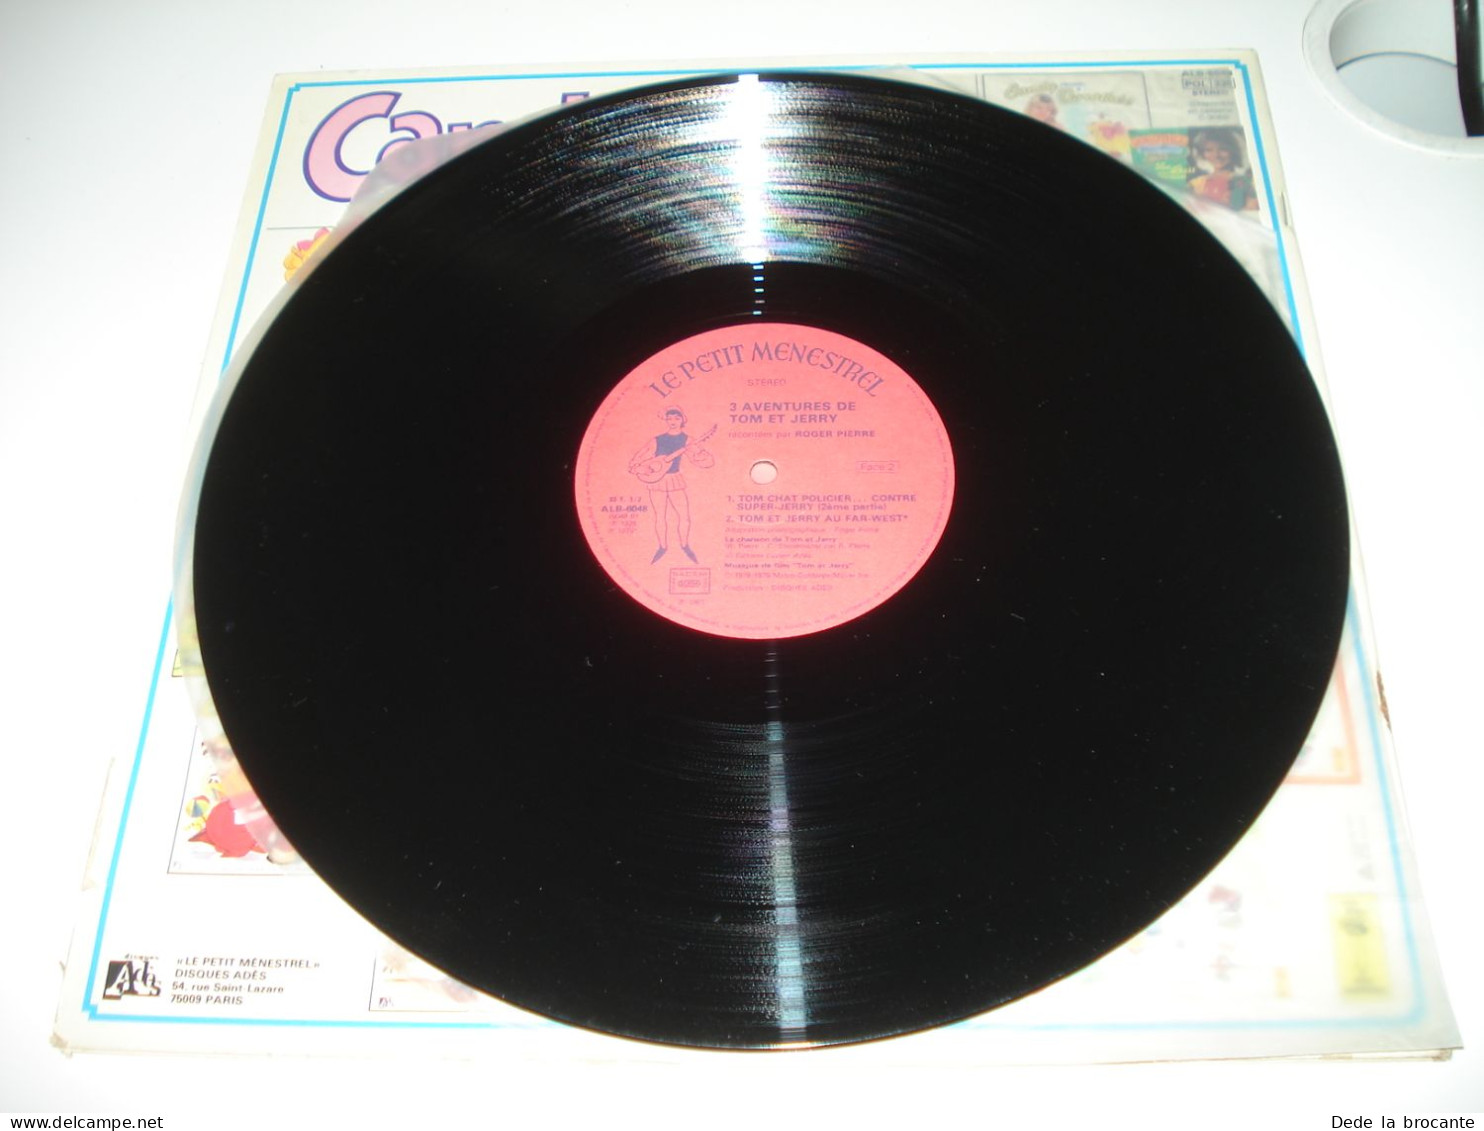 B4 / Tom Jerry - Roger Pierre - LP - Petit Ménestrel - ALB 6048 - FR 1981 - M/G - Children